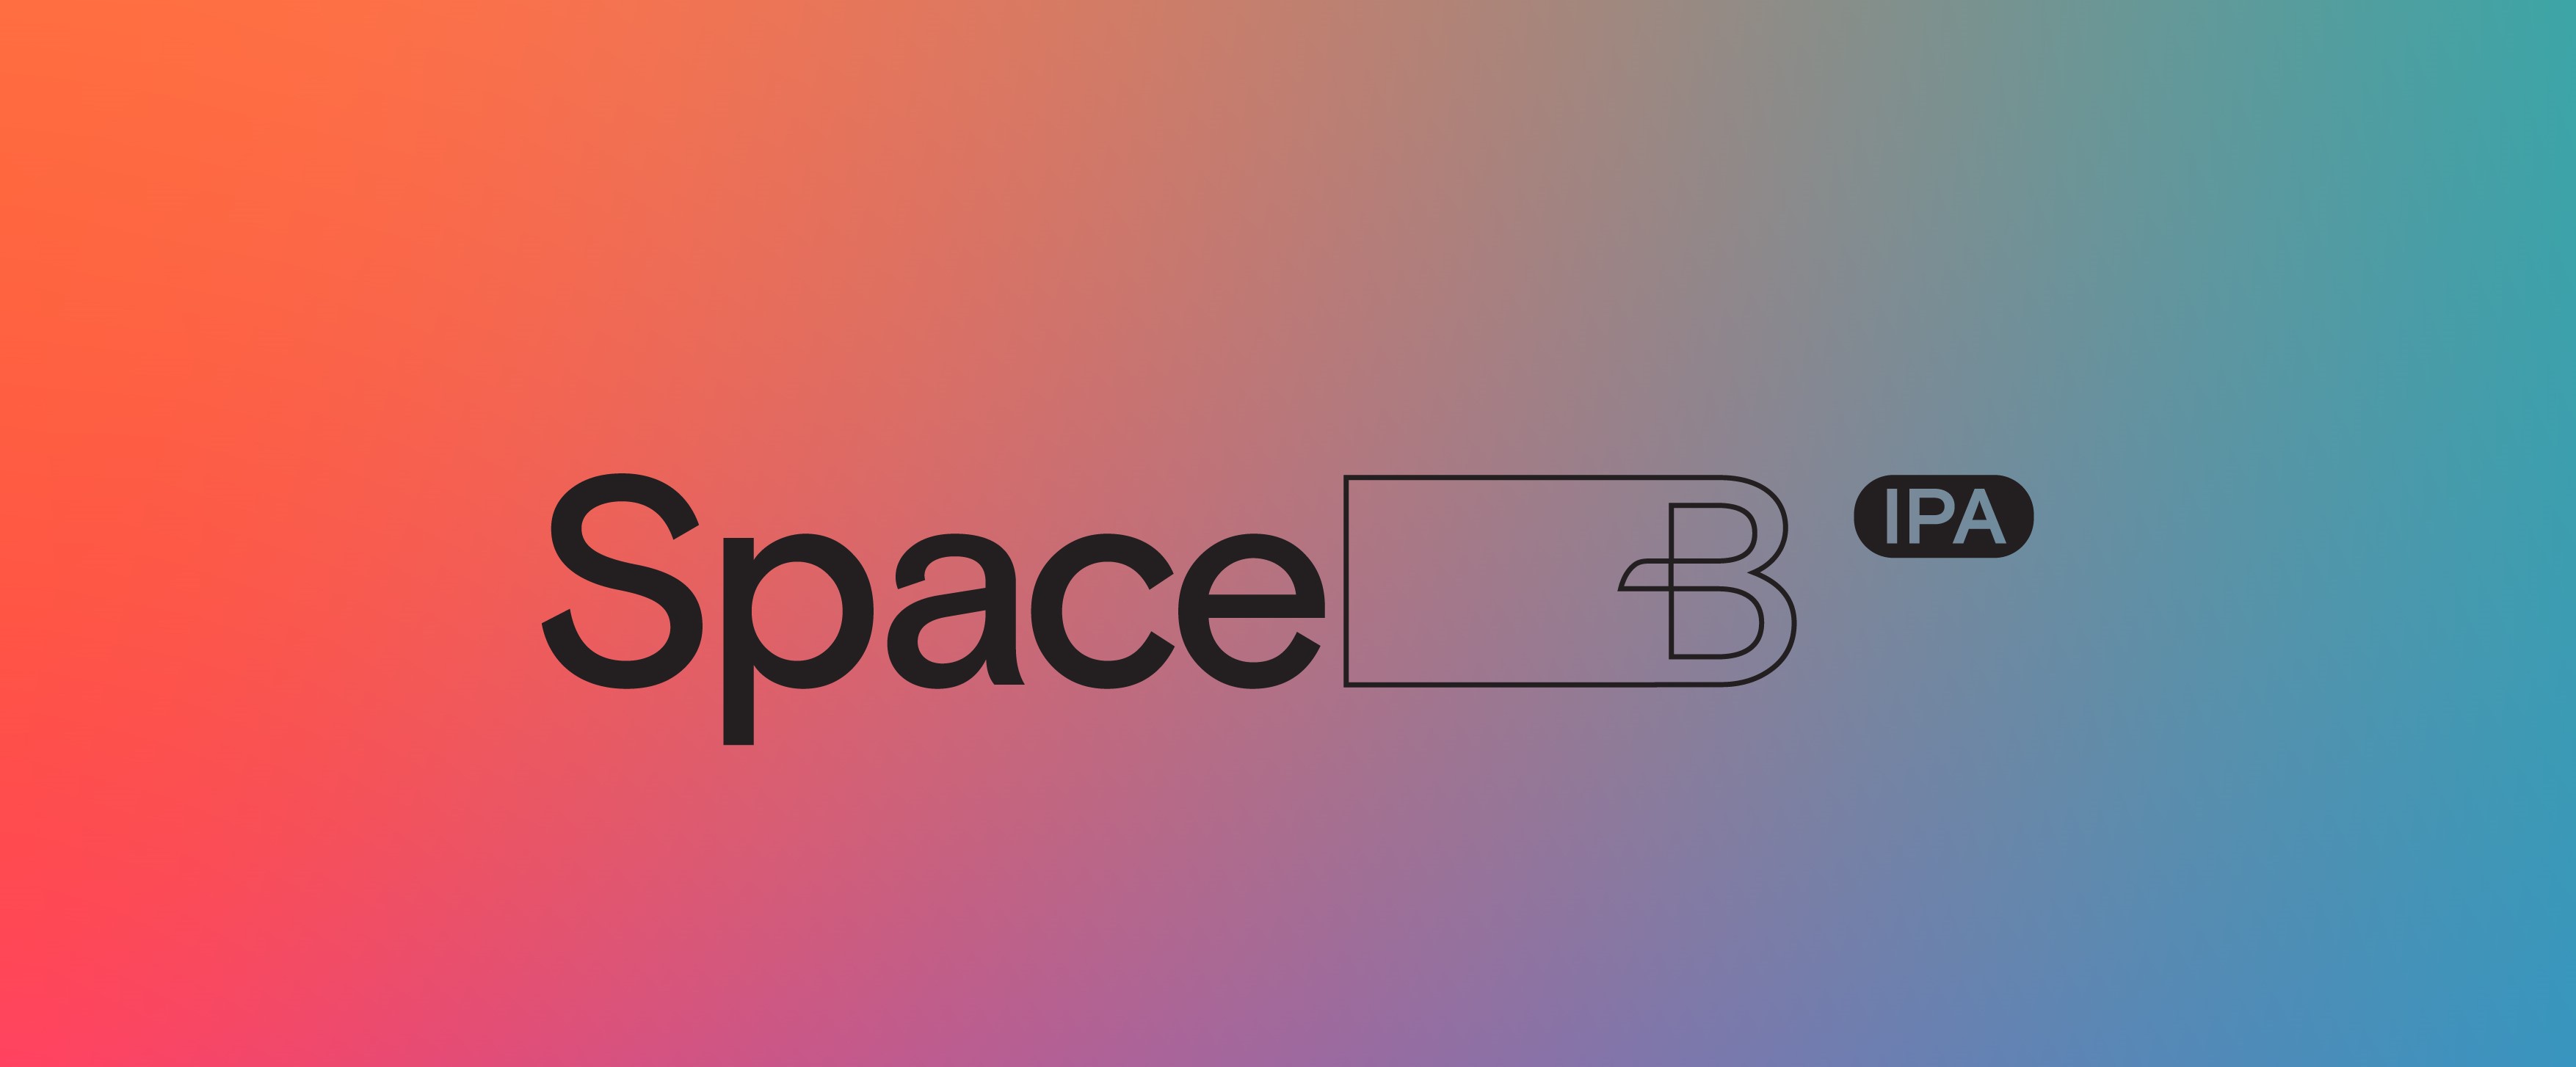 Space B